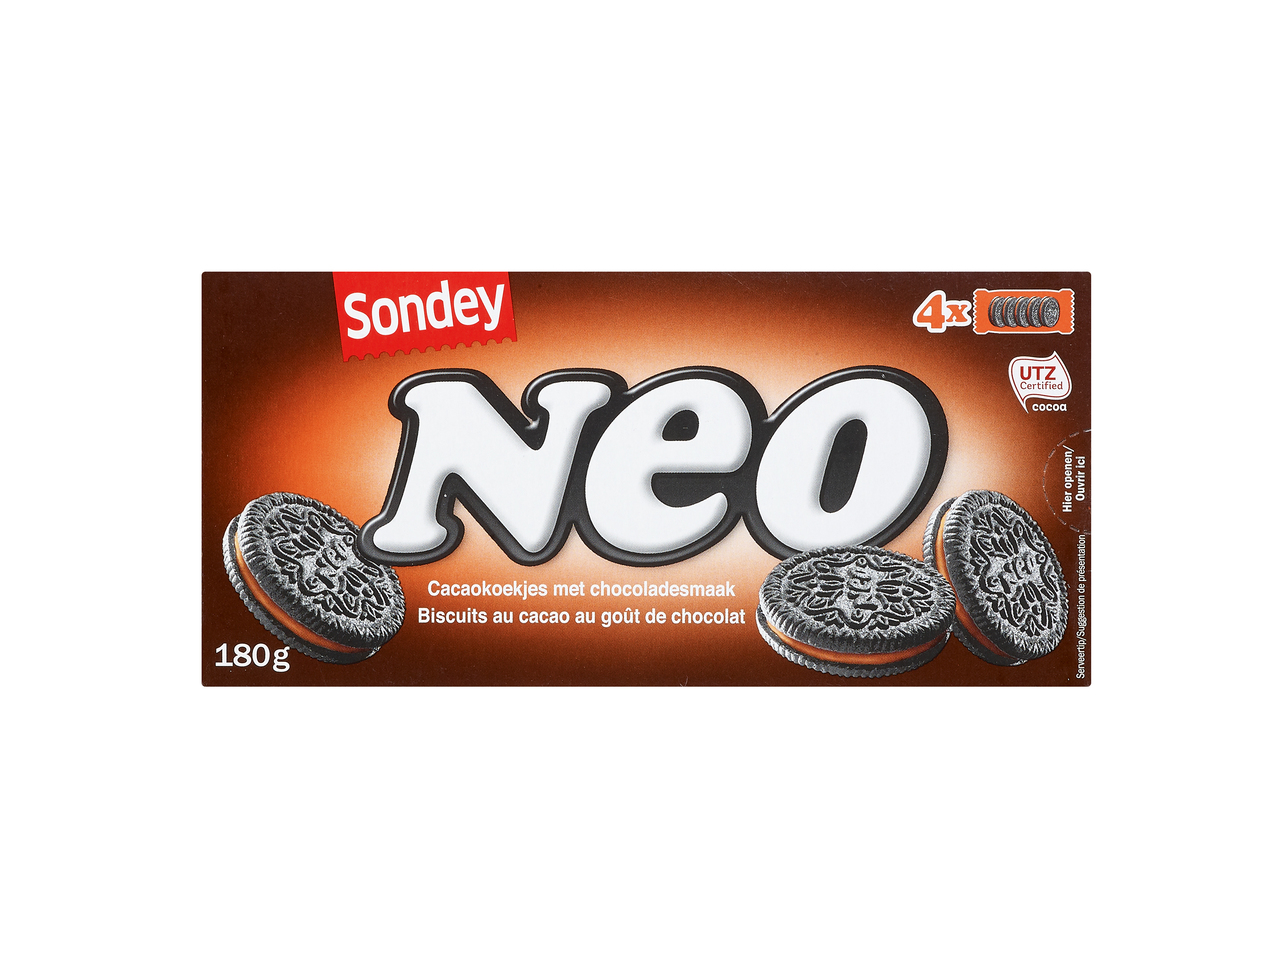 Biscuits Neo